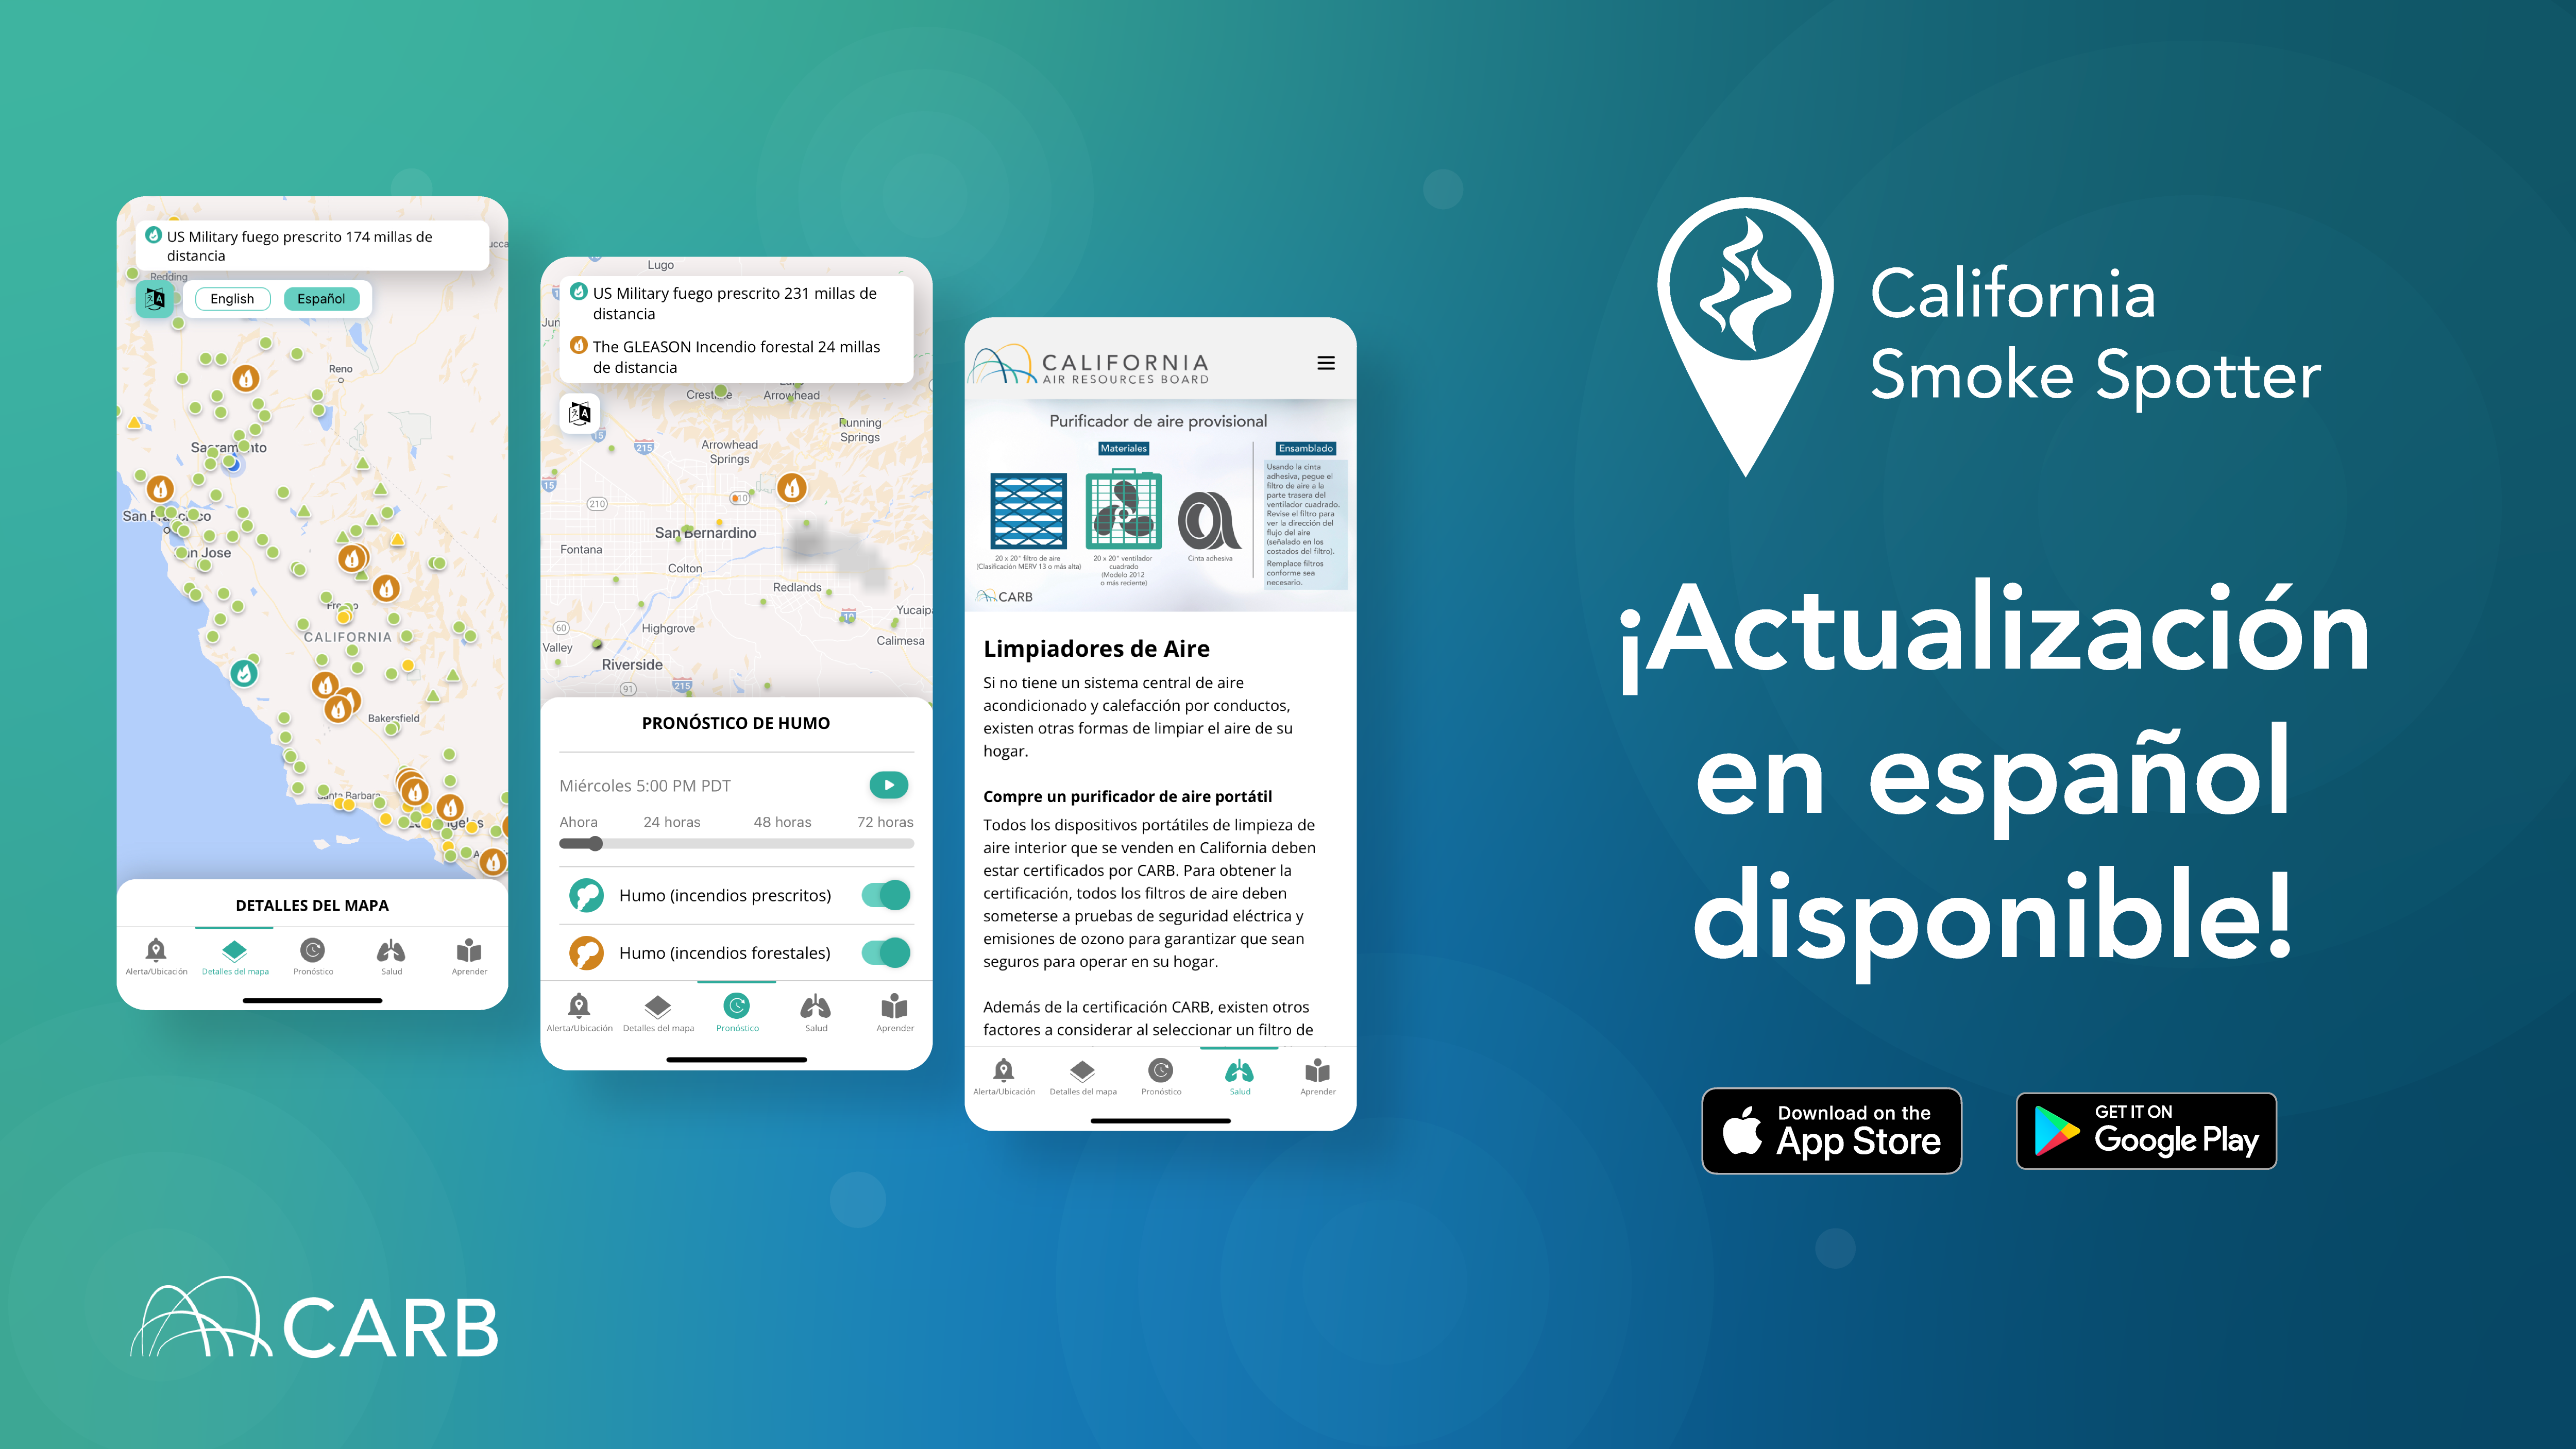 California Smoke Spotter - Actualizaciôn en español disponible!